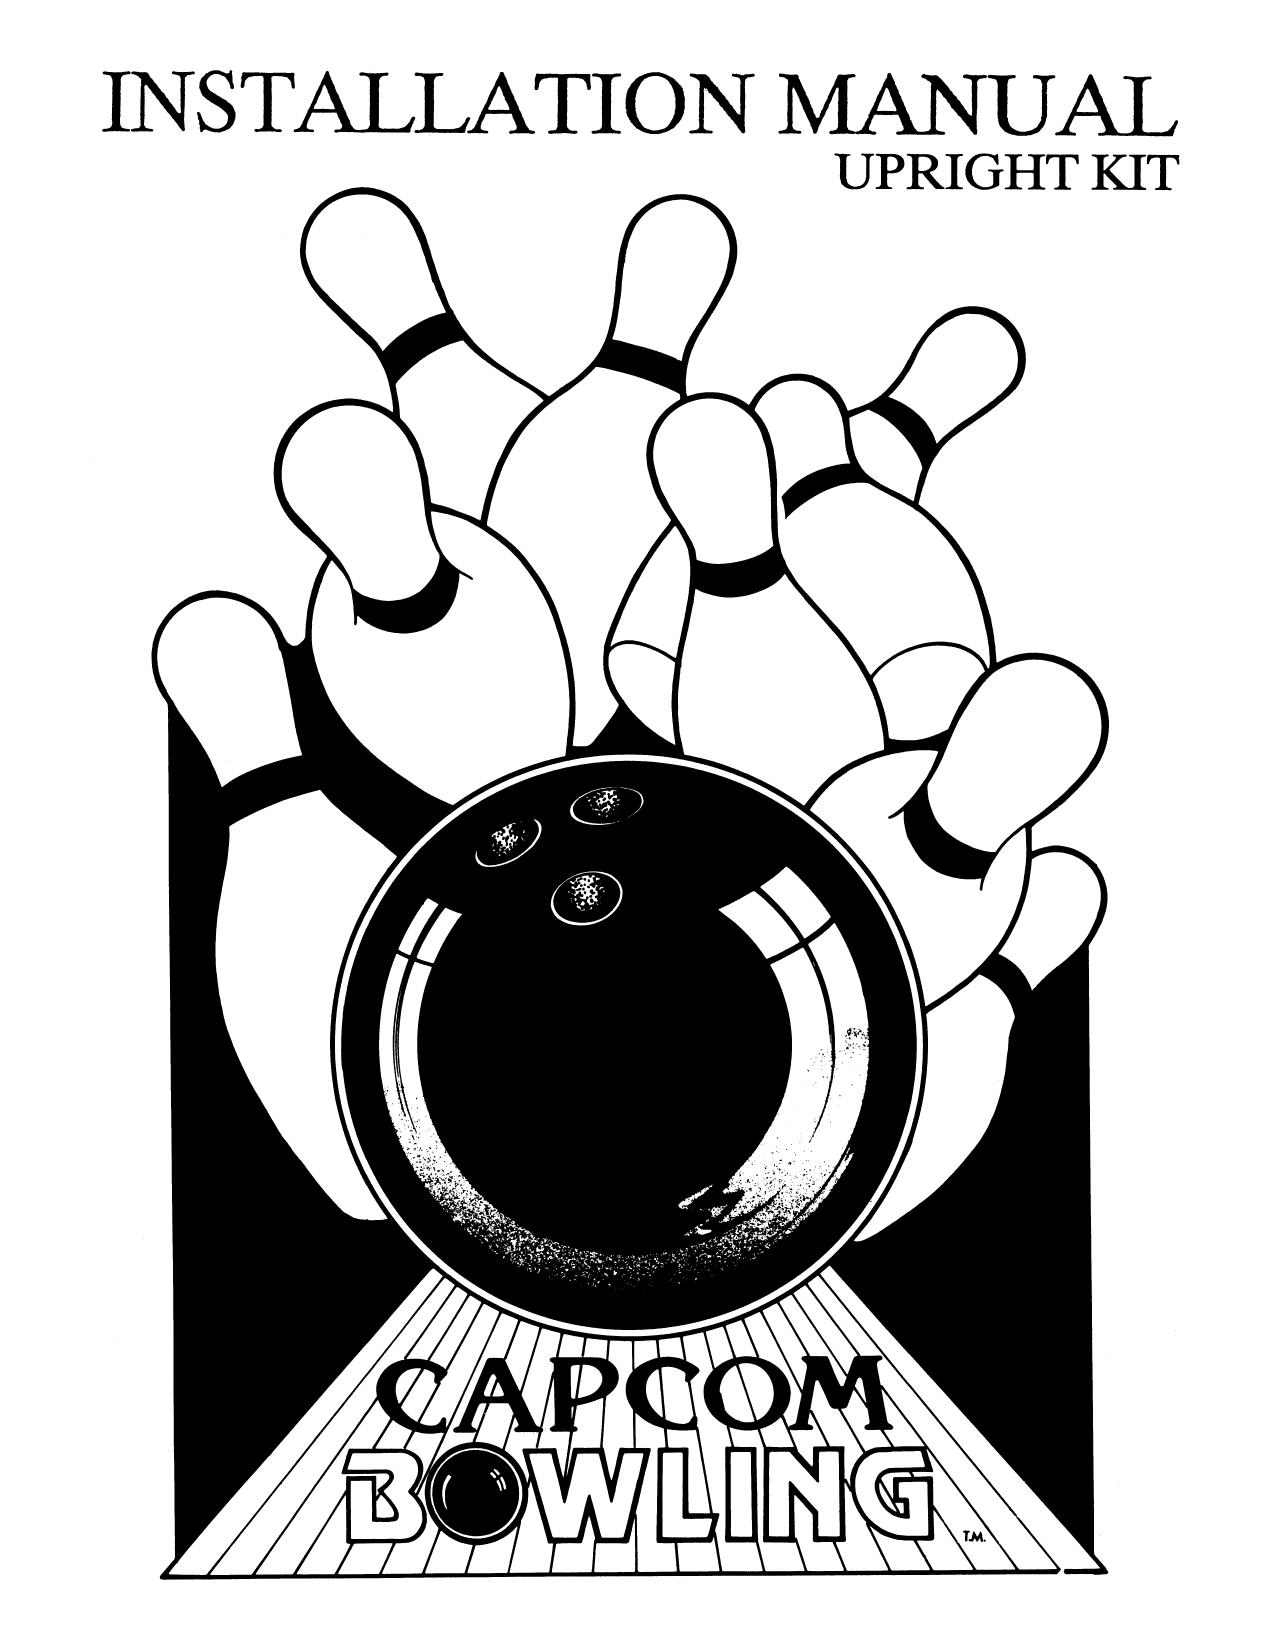 CapcomBowling Manual